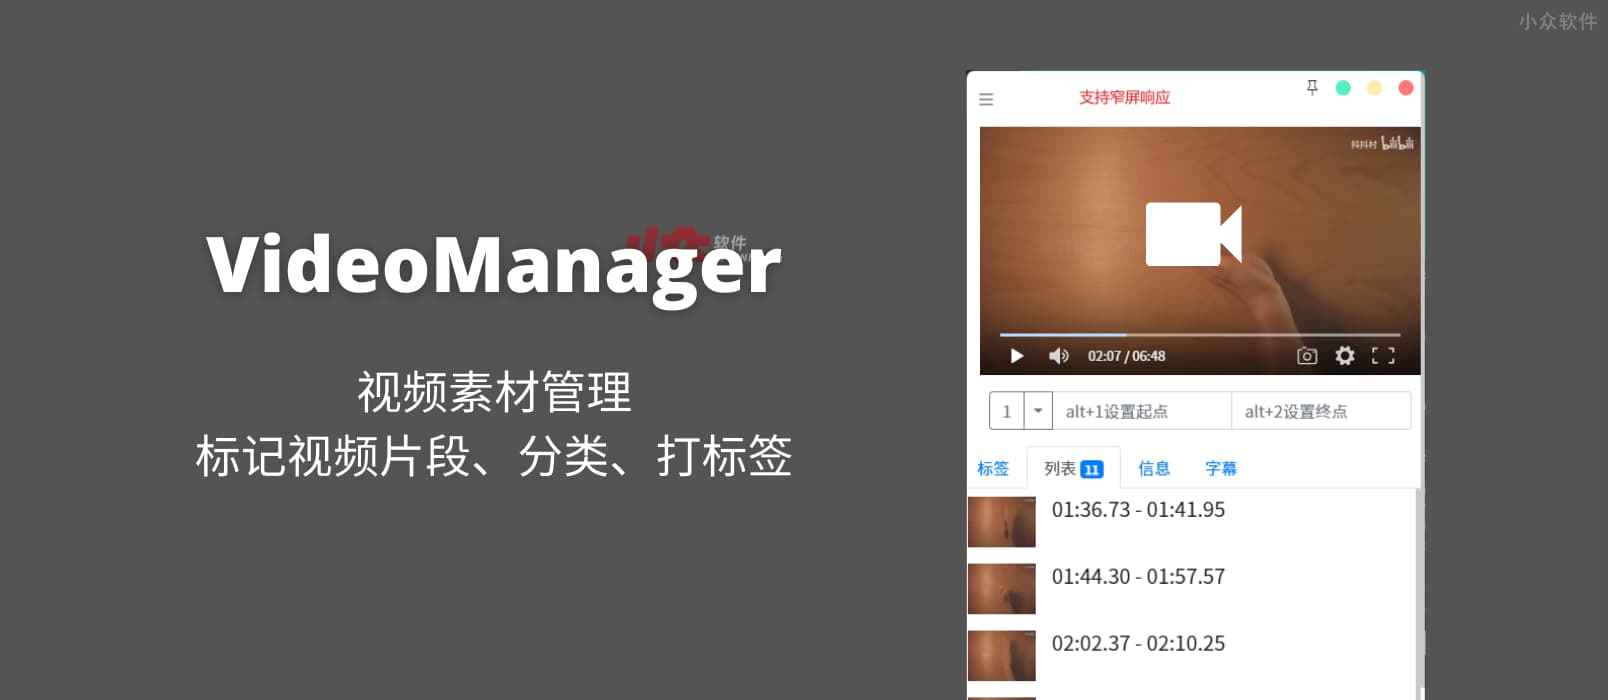 VideoManager – 视频素材管理：标记视频片段标记、分类、打标签，然后批量搜索导出[Windows]